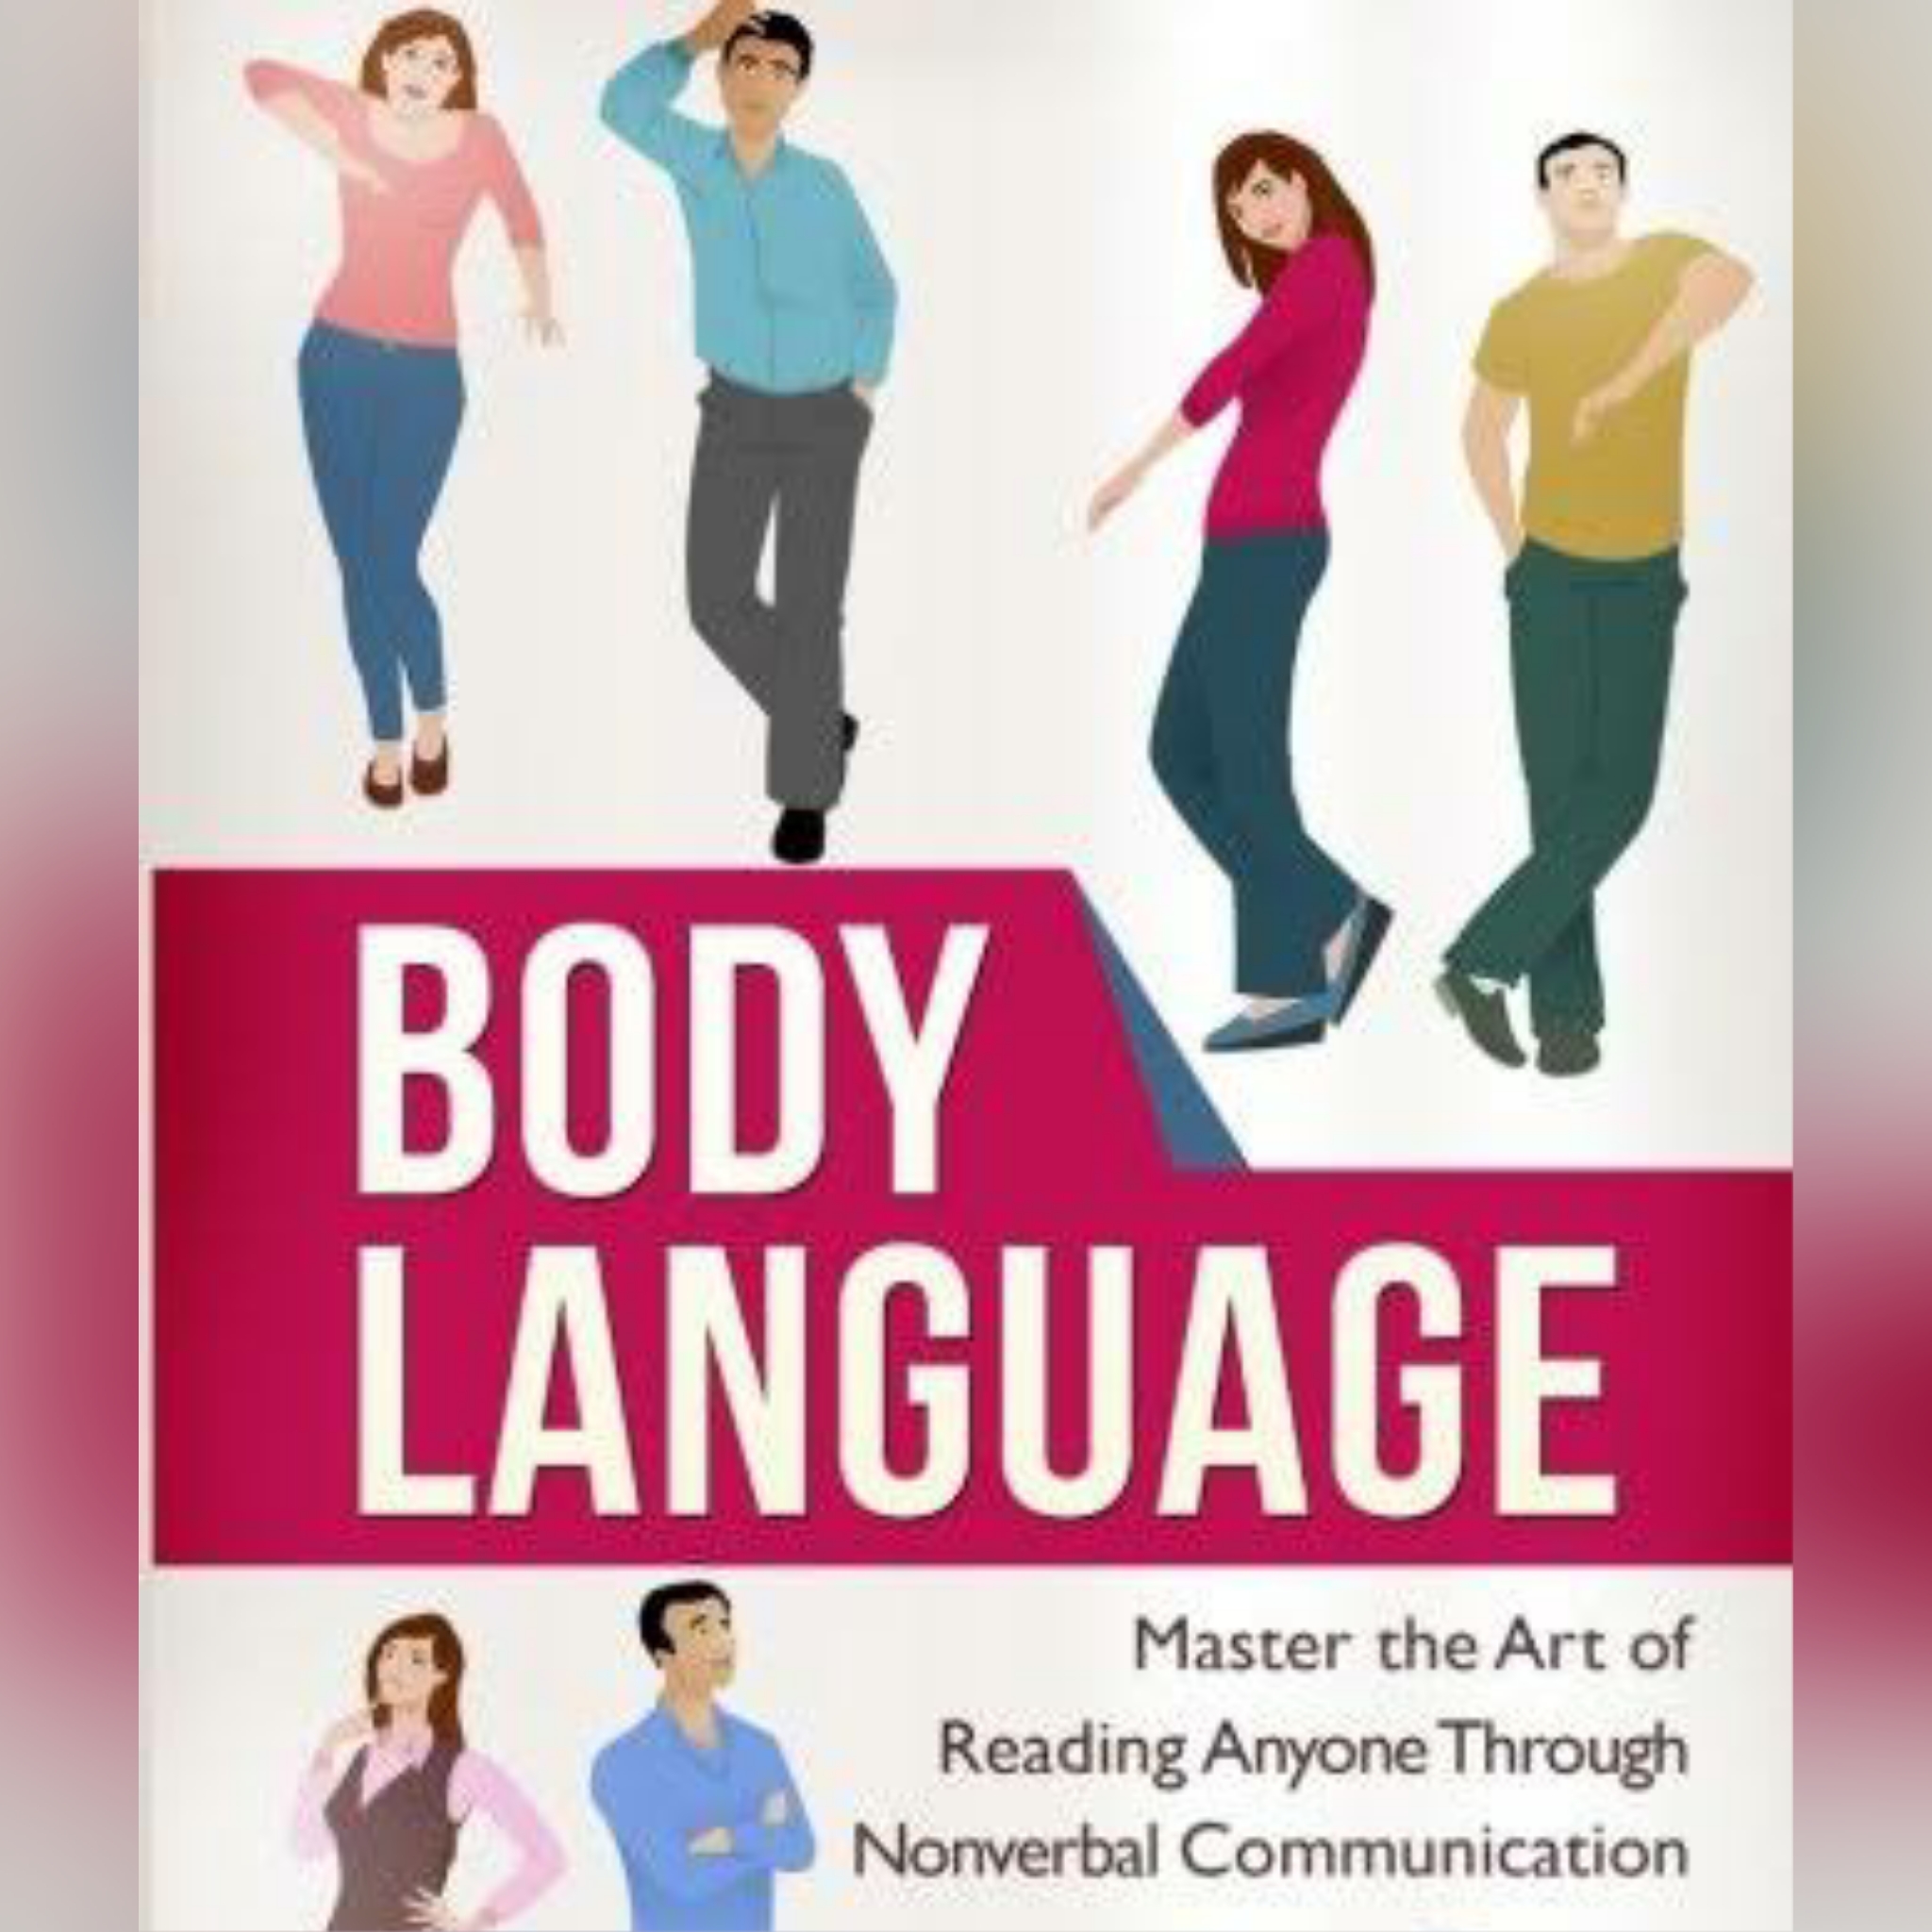 Язык тела картинки. Язык тела арт. Body language nonverbal communication. Body language Queen. Body communication